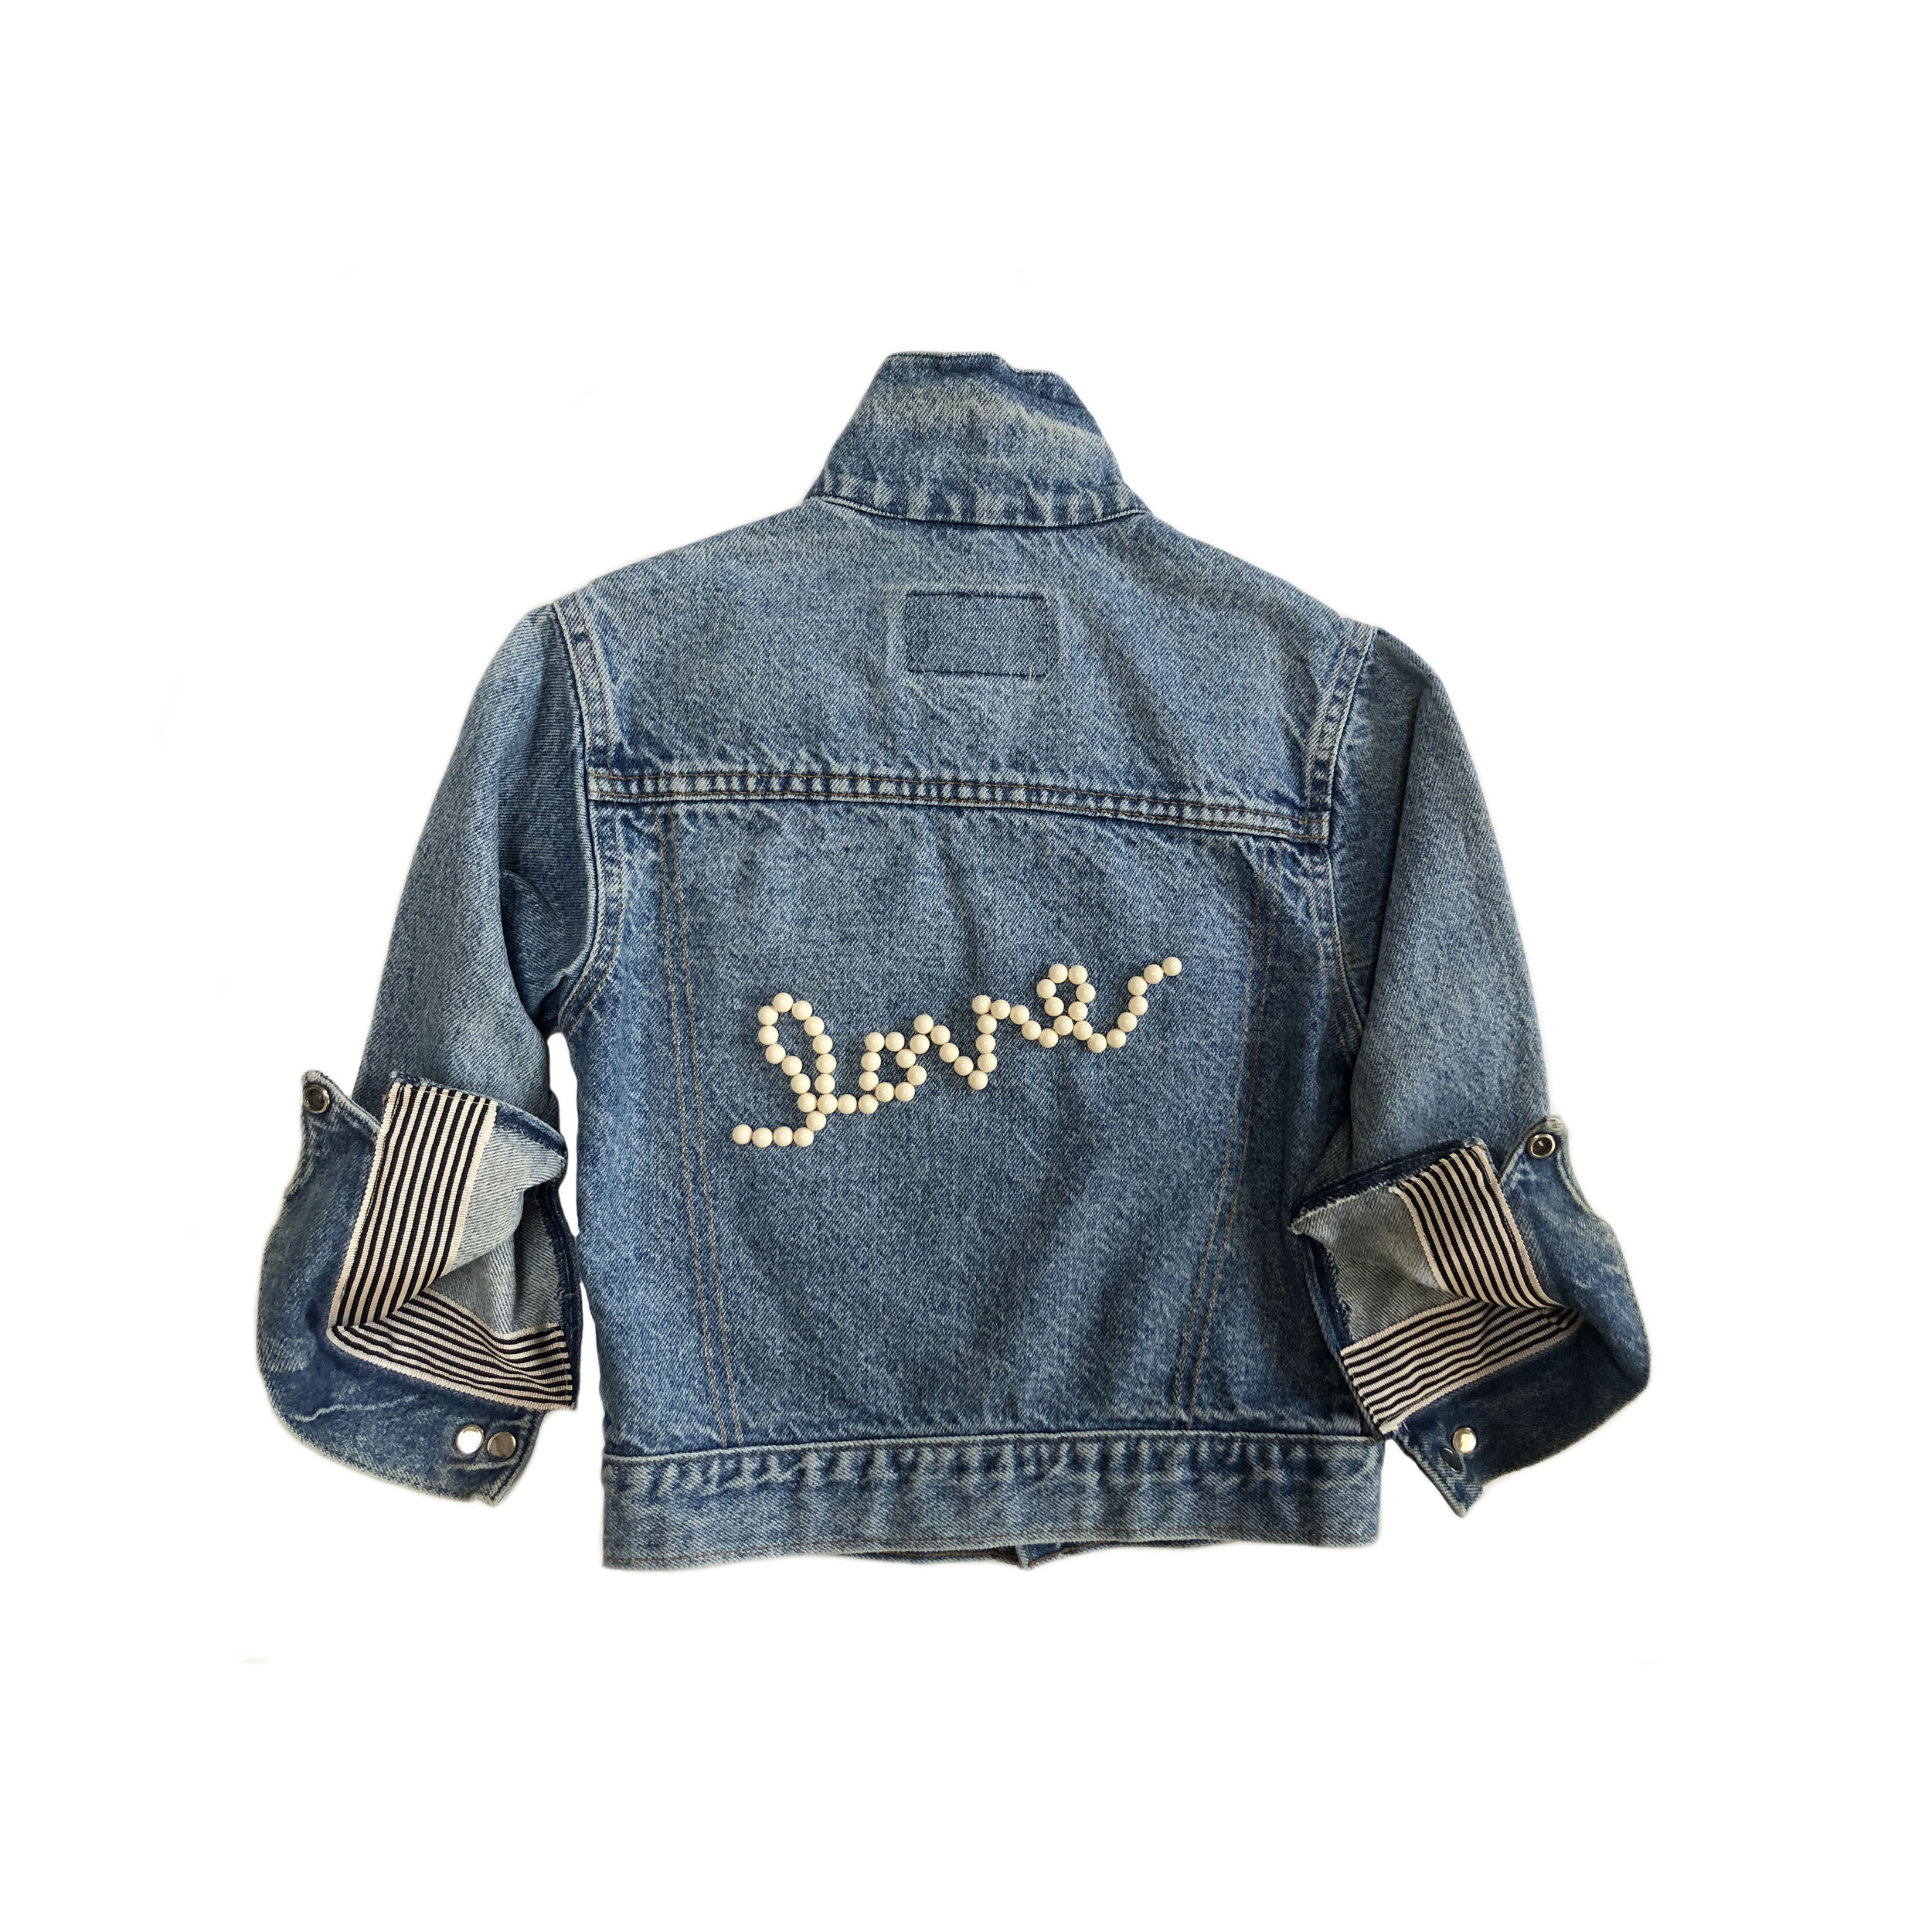 levi's custom jean jacket